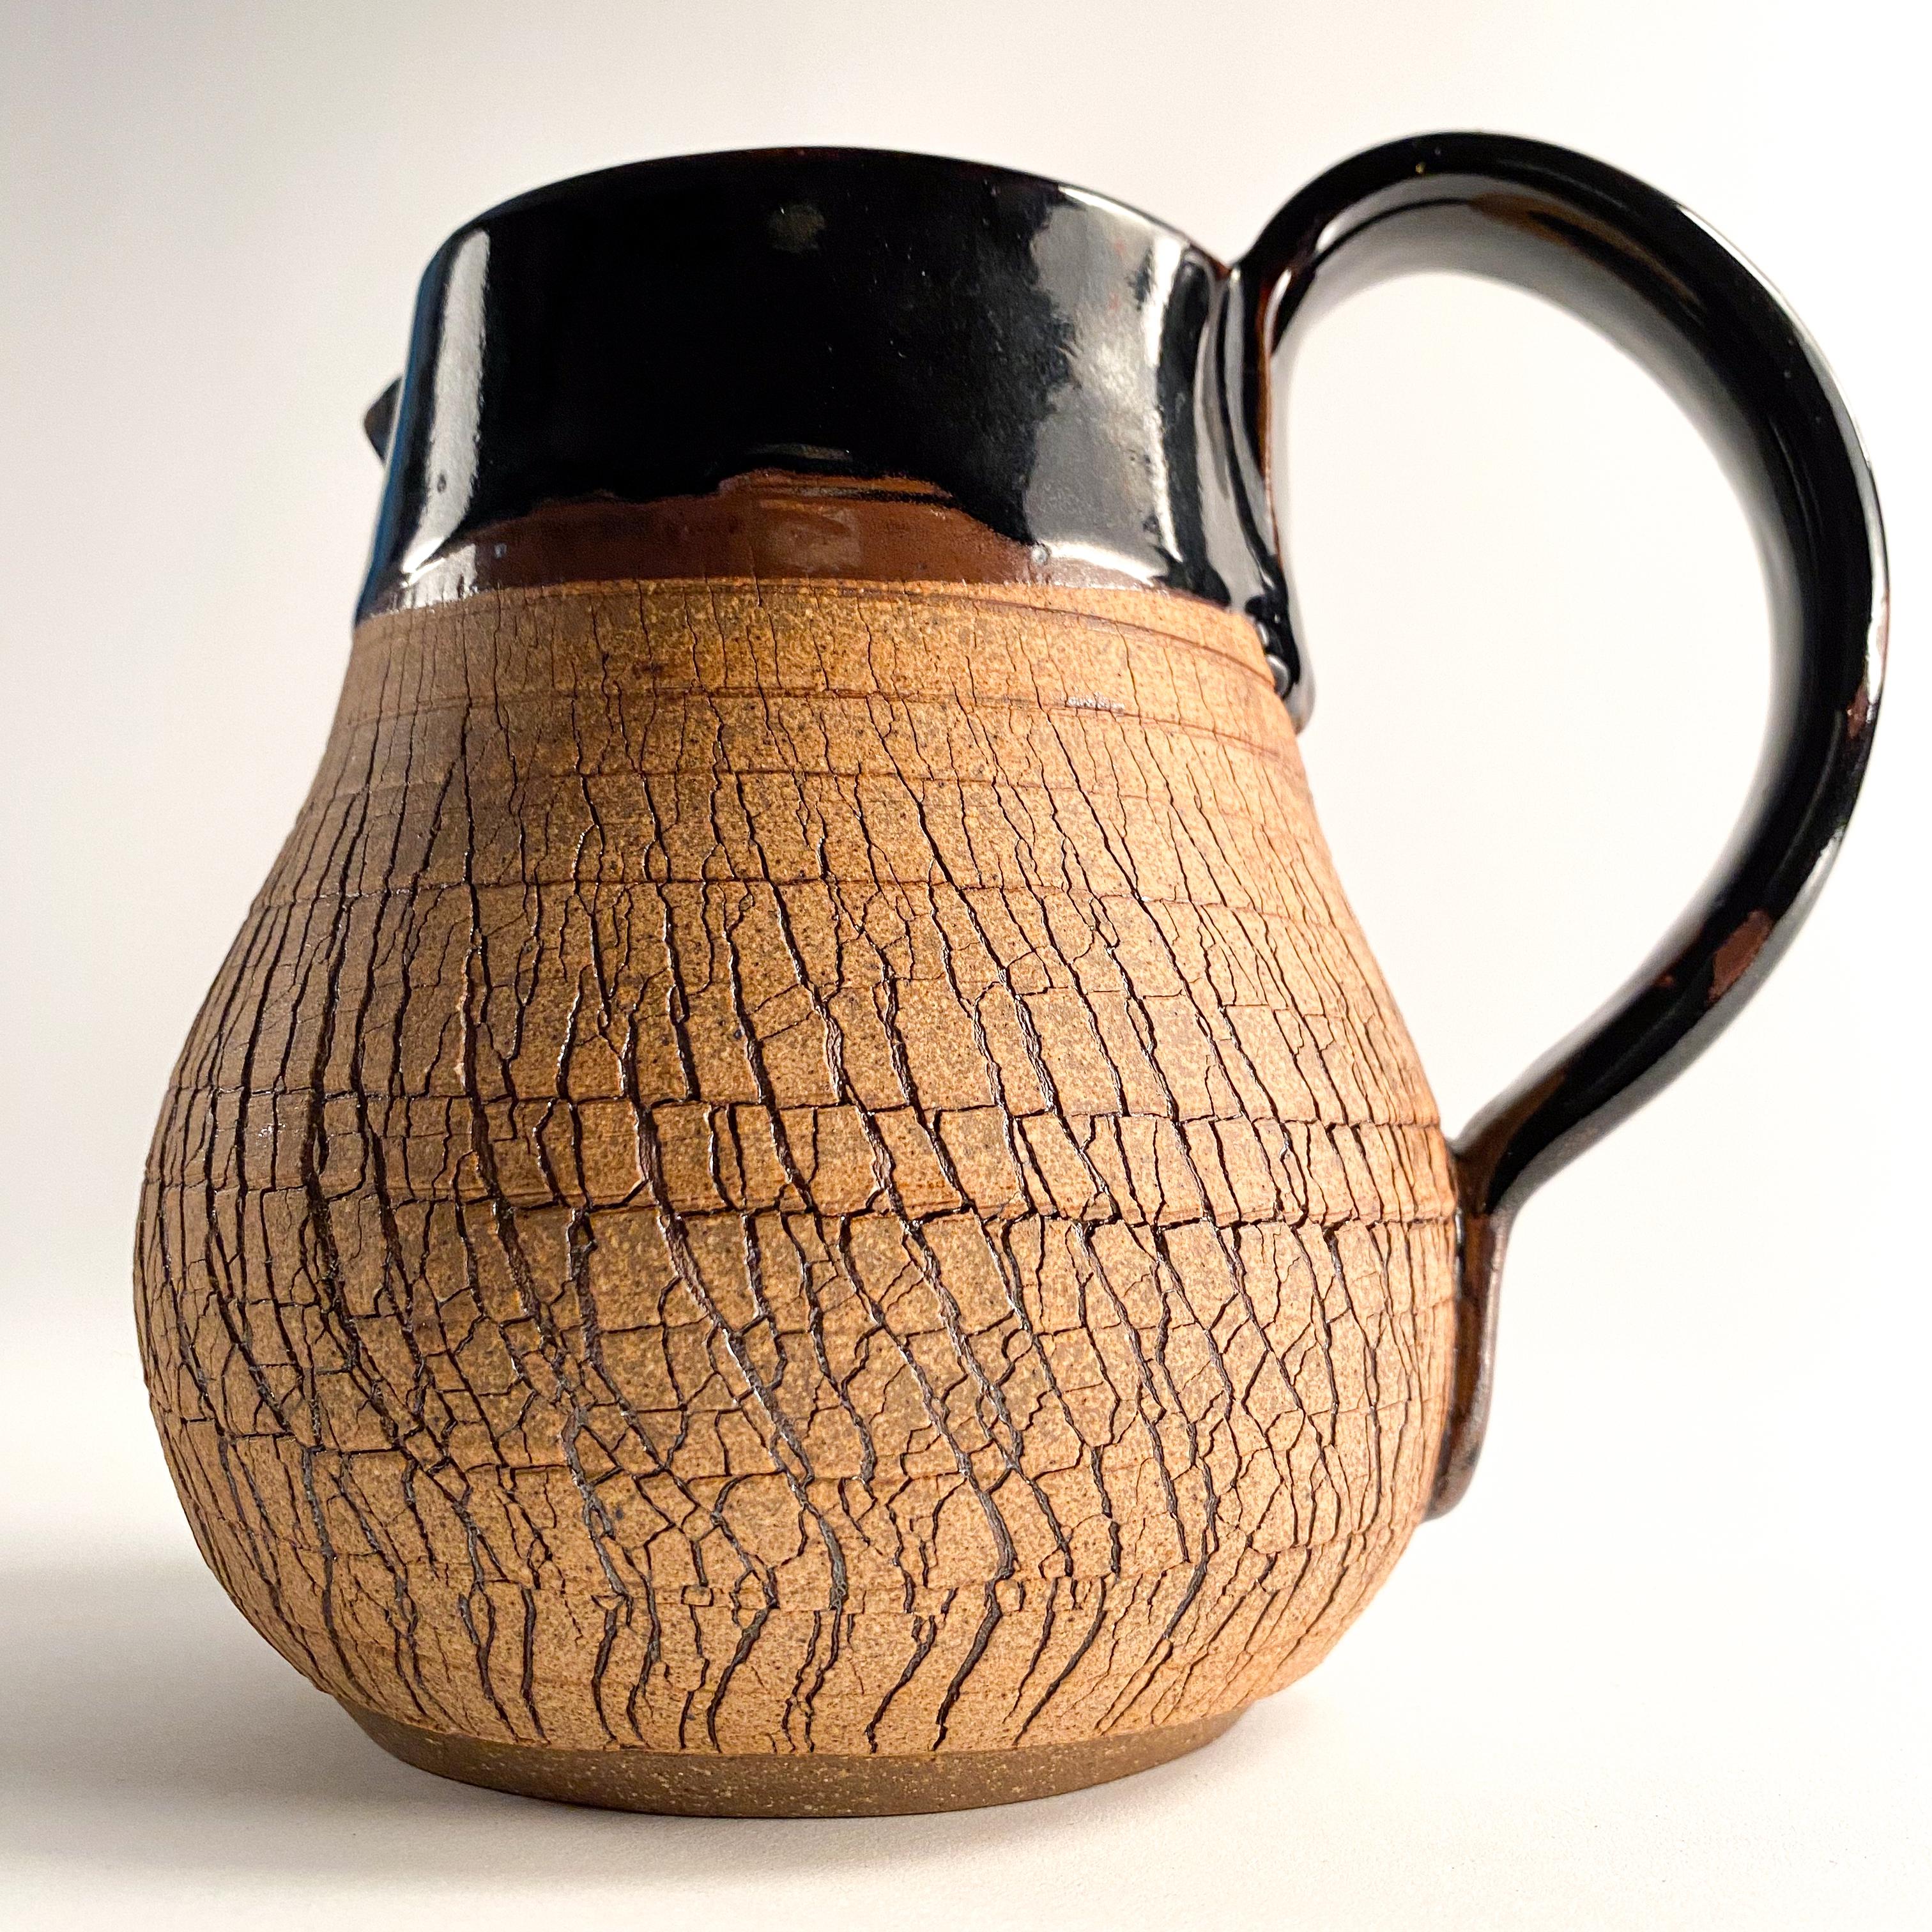 Contemporary studio pottery cracked glaze pitcher For Sale